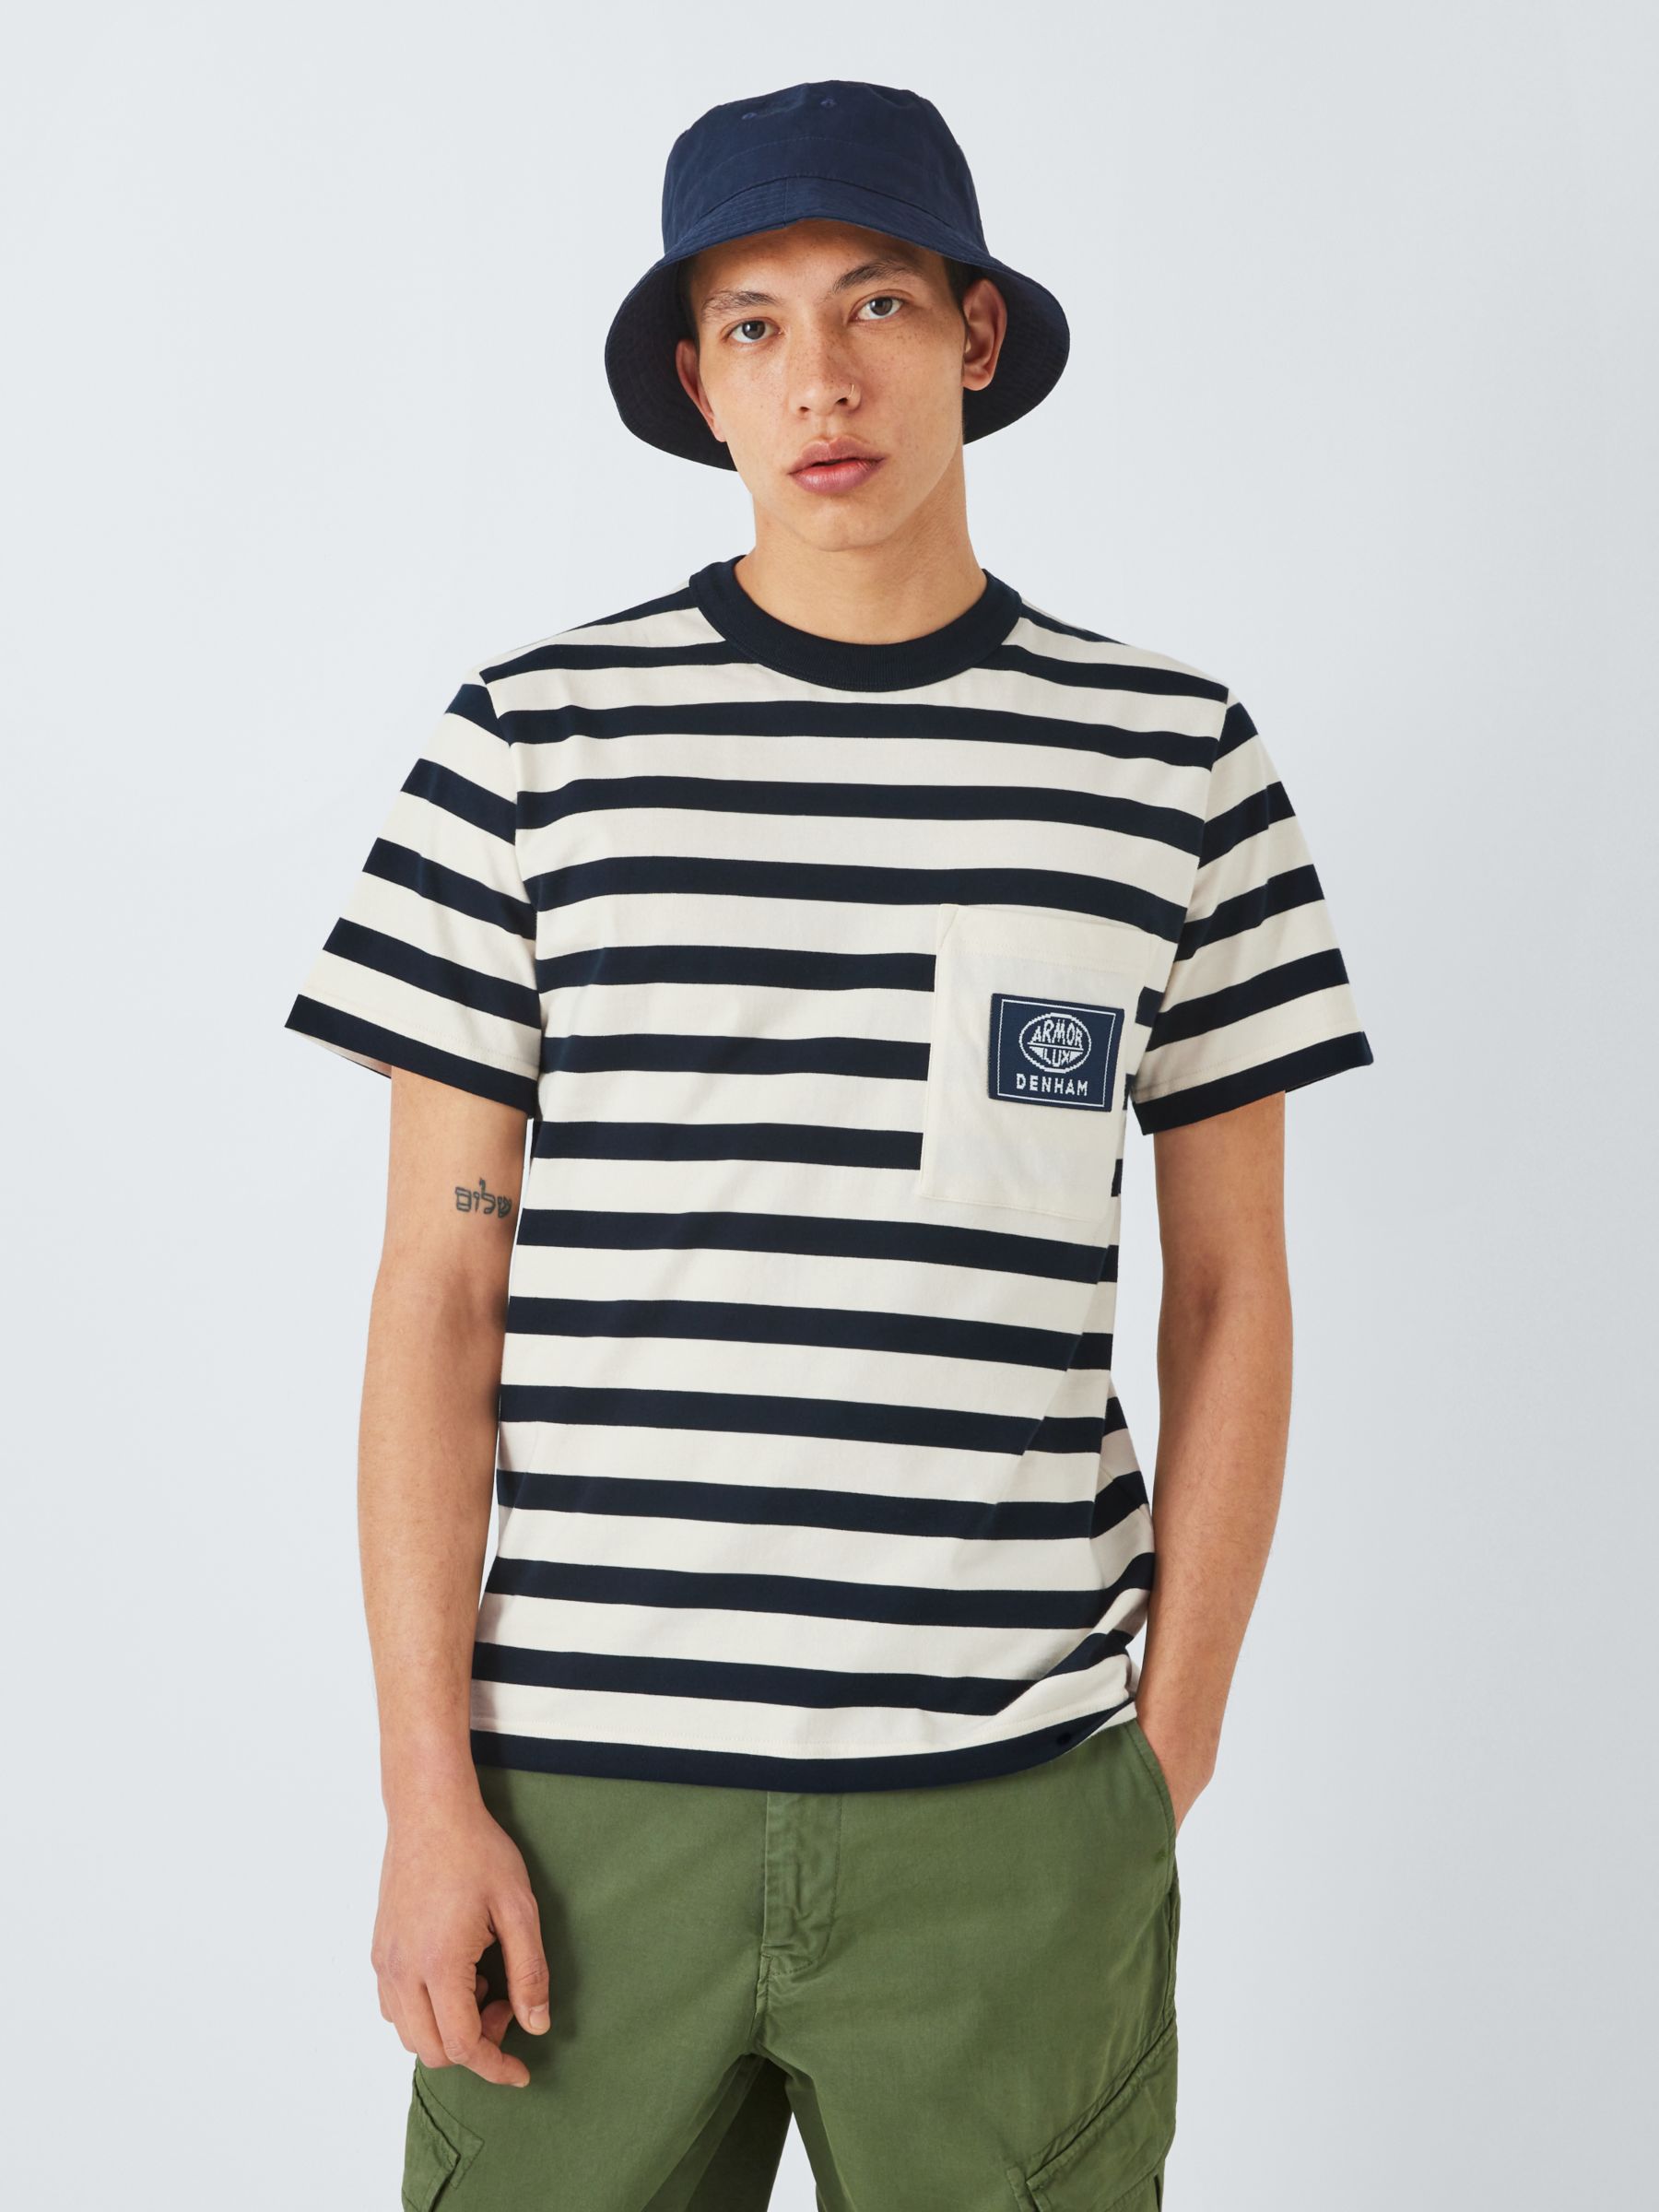 Armor Lux x Denham Comfort Striped T-Shirt, Nature/Navy, L